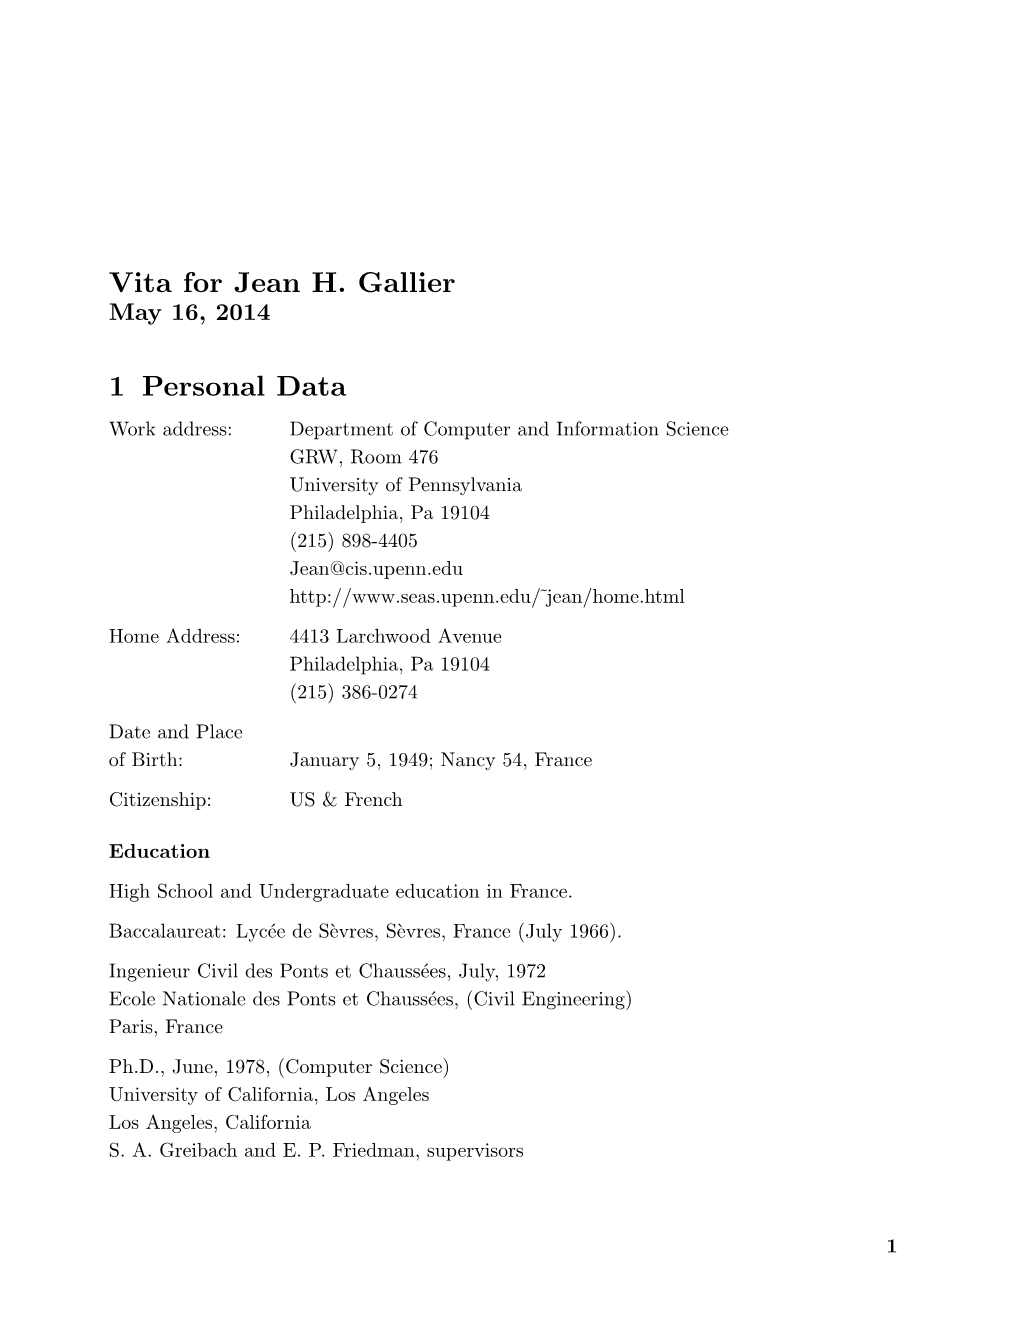 Vita for Jean H. Gallier 1 Personal Data